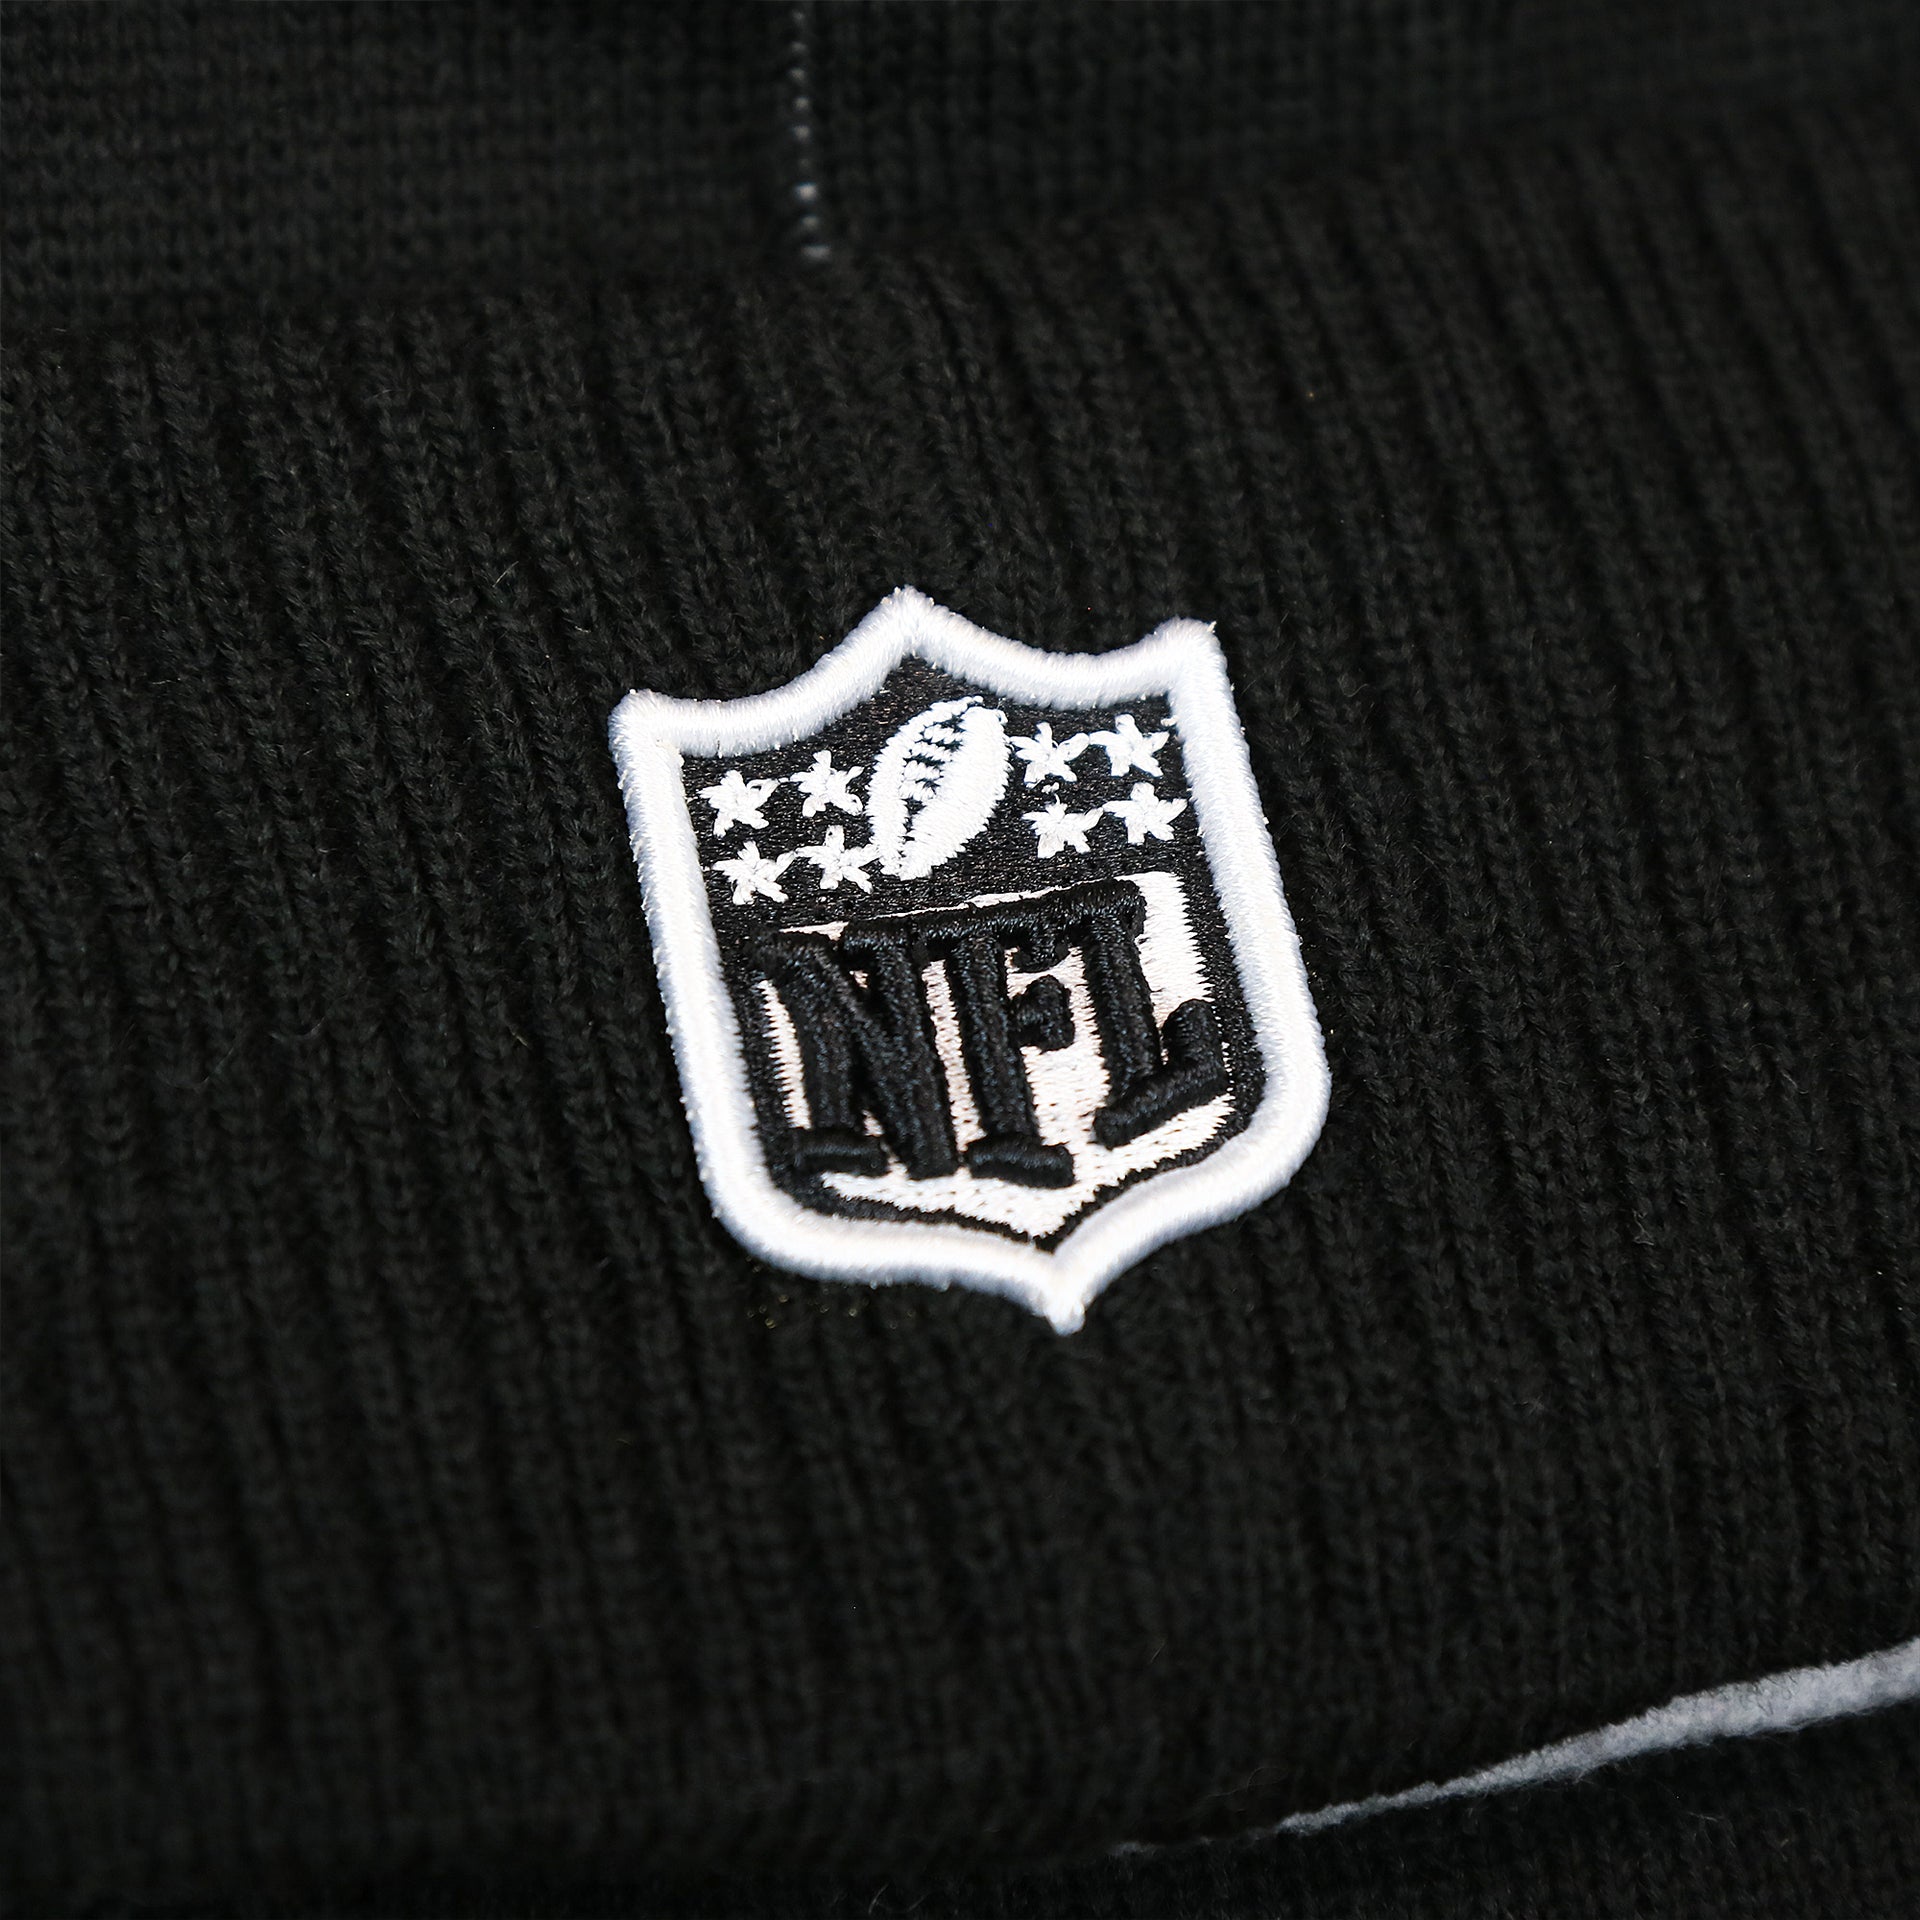 The NFL Logo on the Philadelphia Eagles On Field Cuffed Winter Pom Pom Beanie | Black And White Winter Beanie